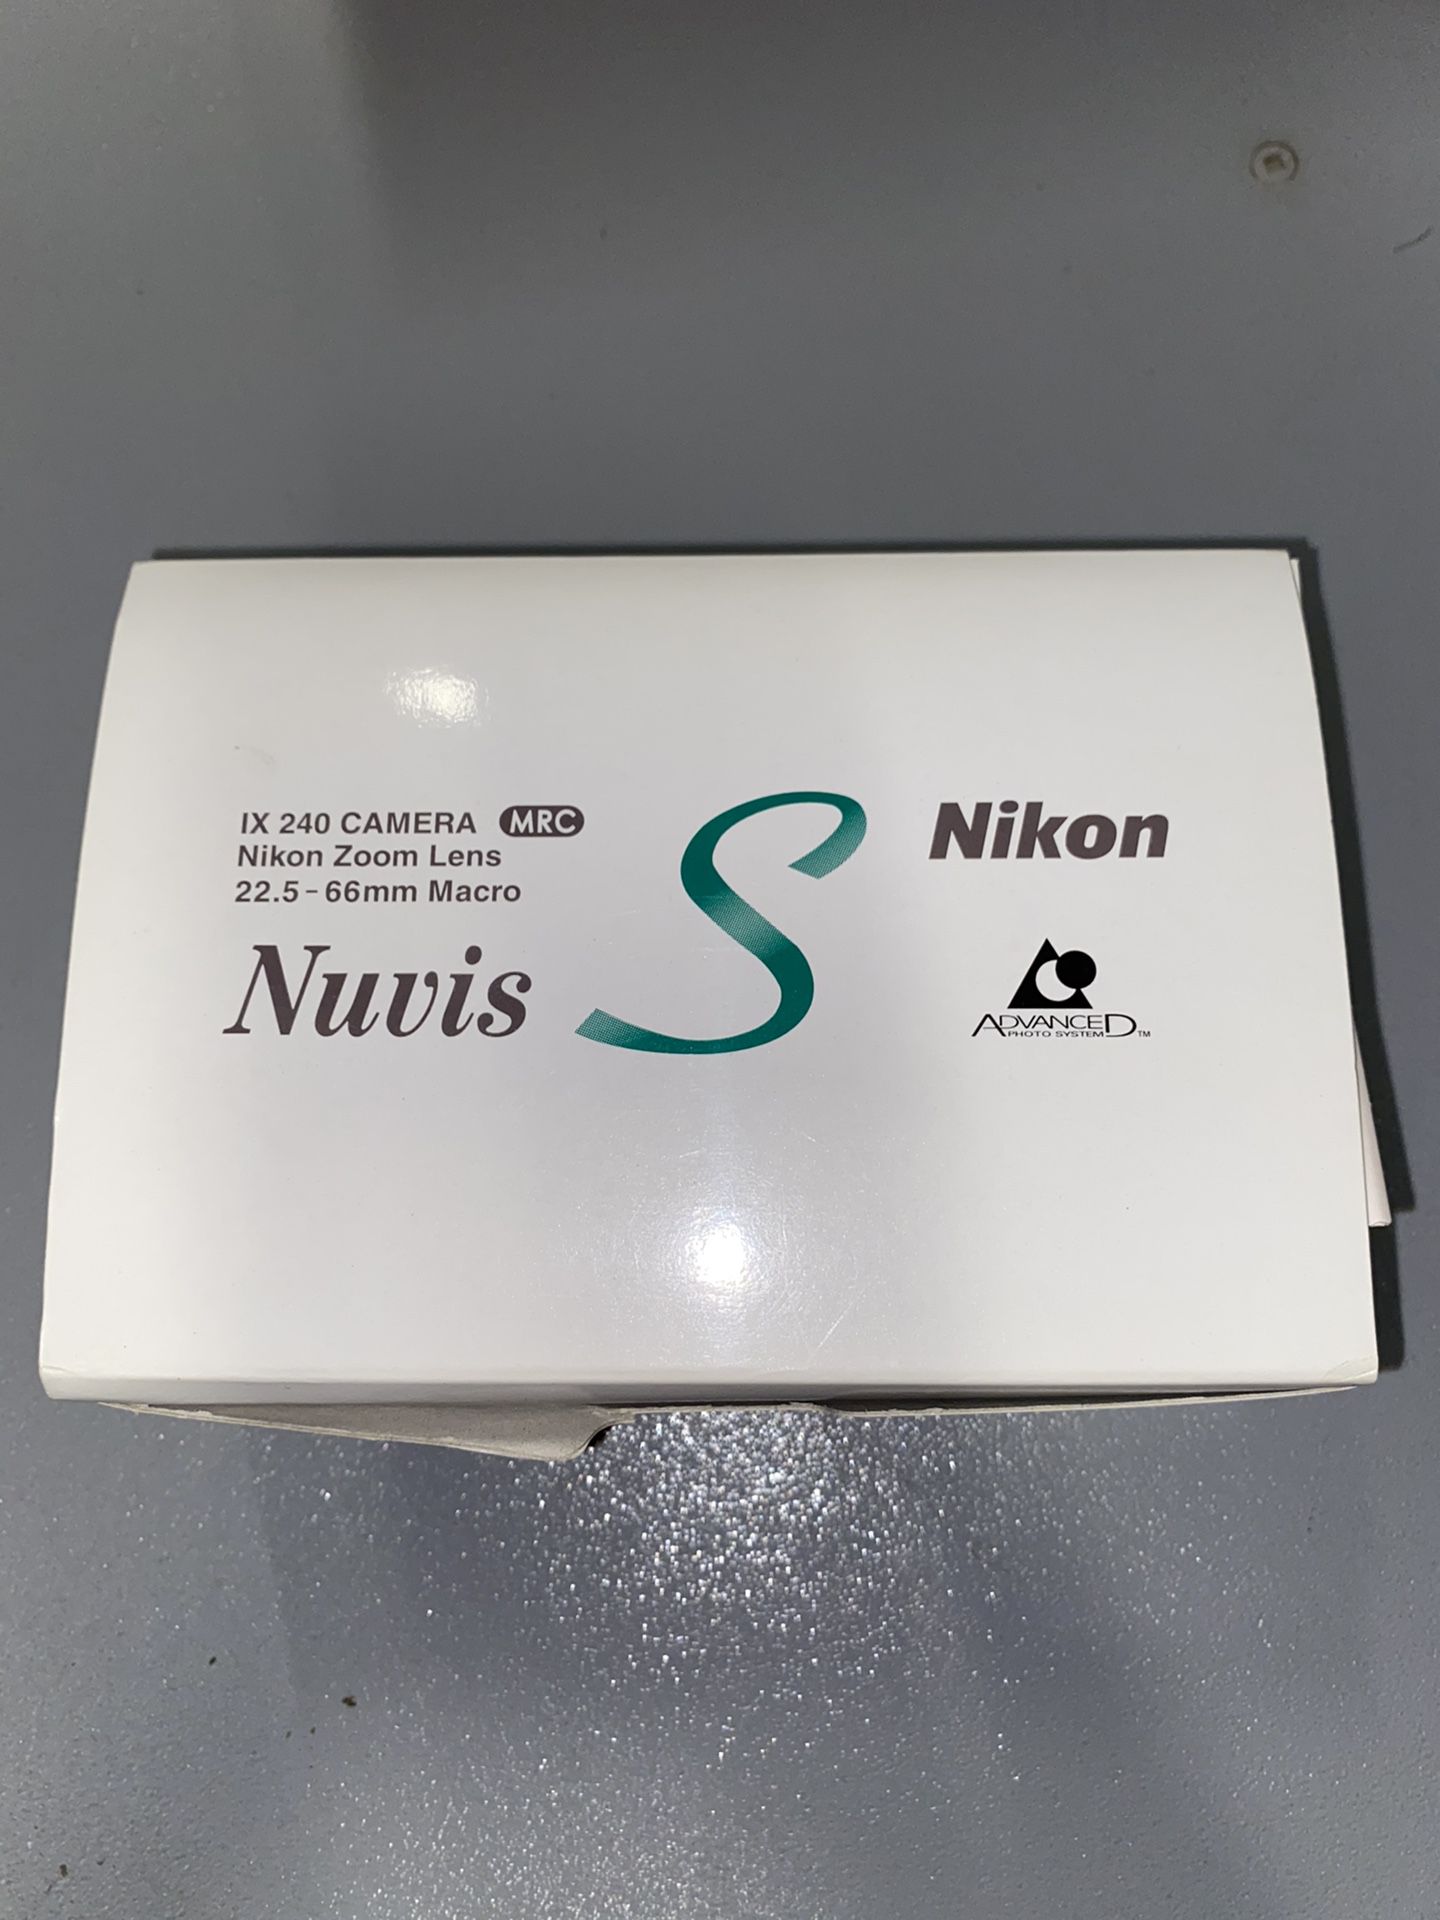 Nikon Nuvis S Digital Camera